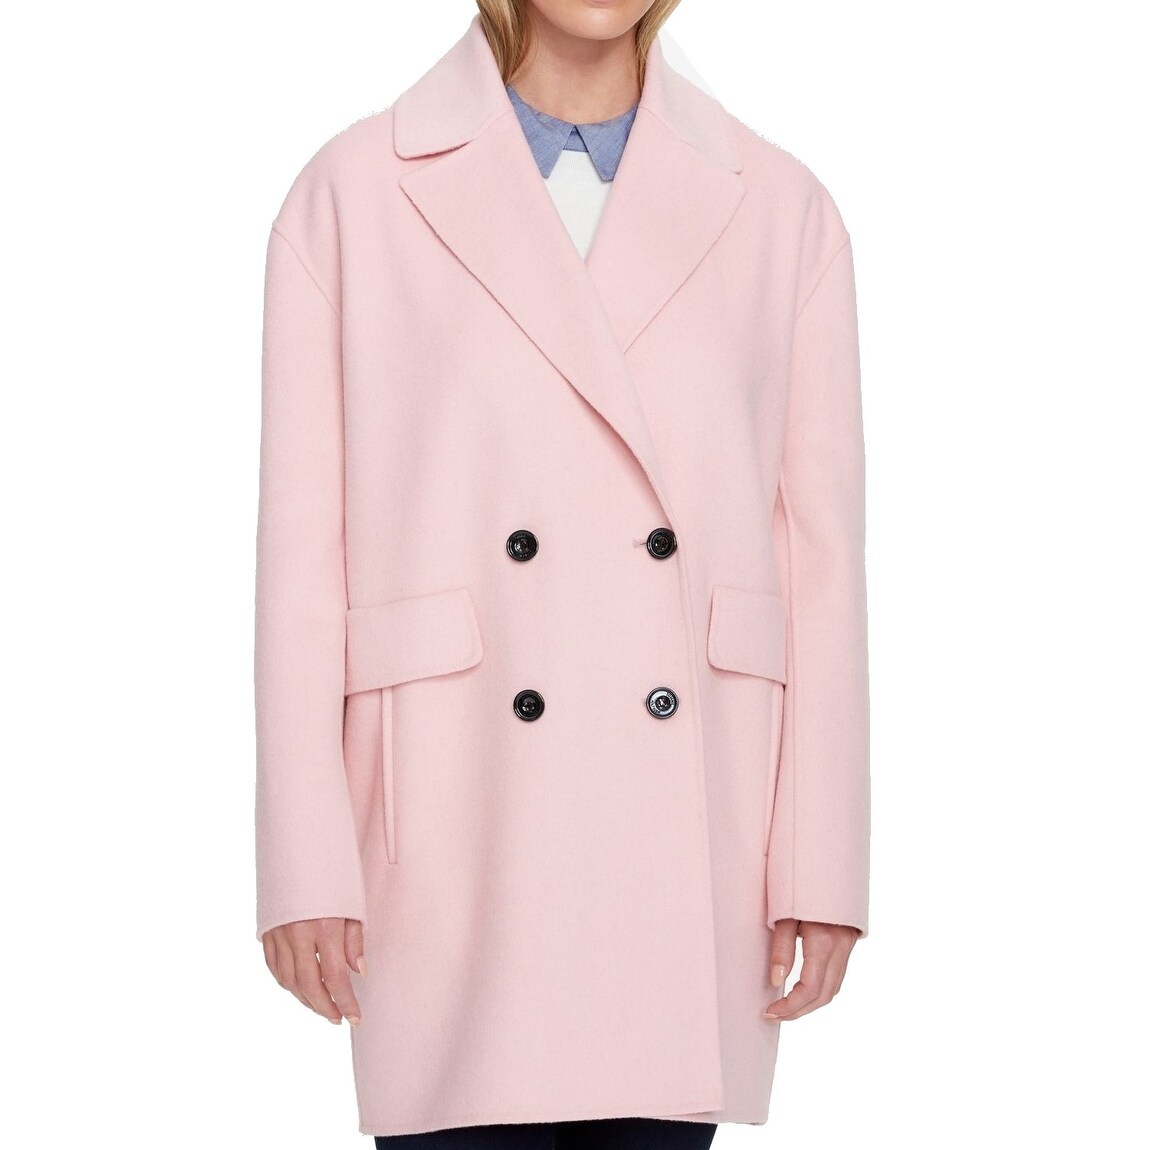 pink pea coat plus size